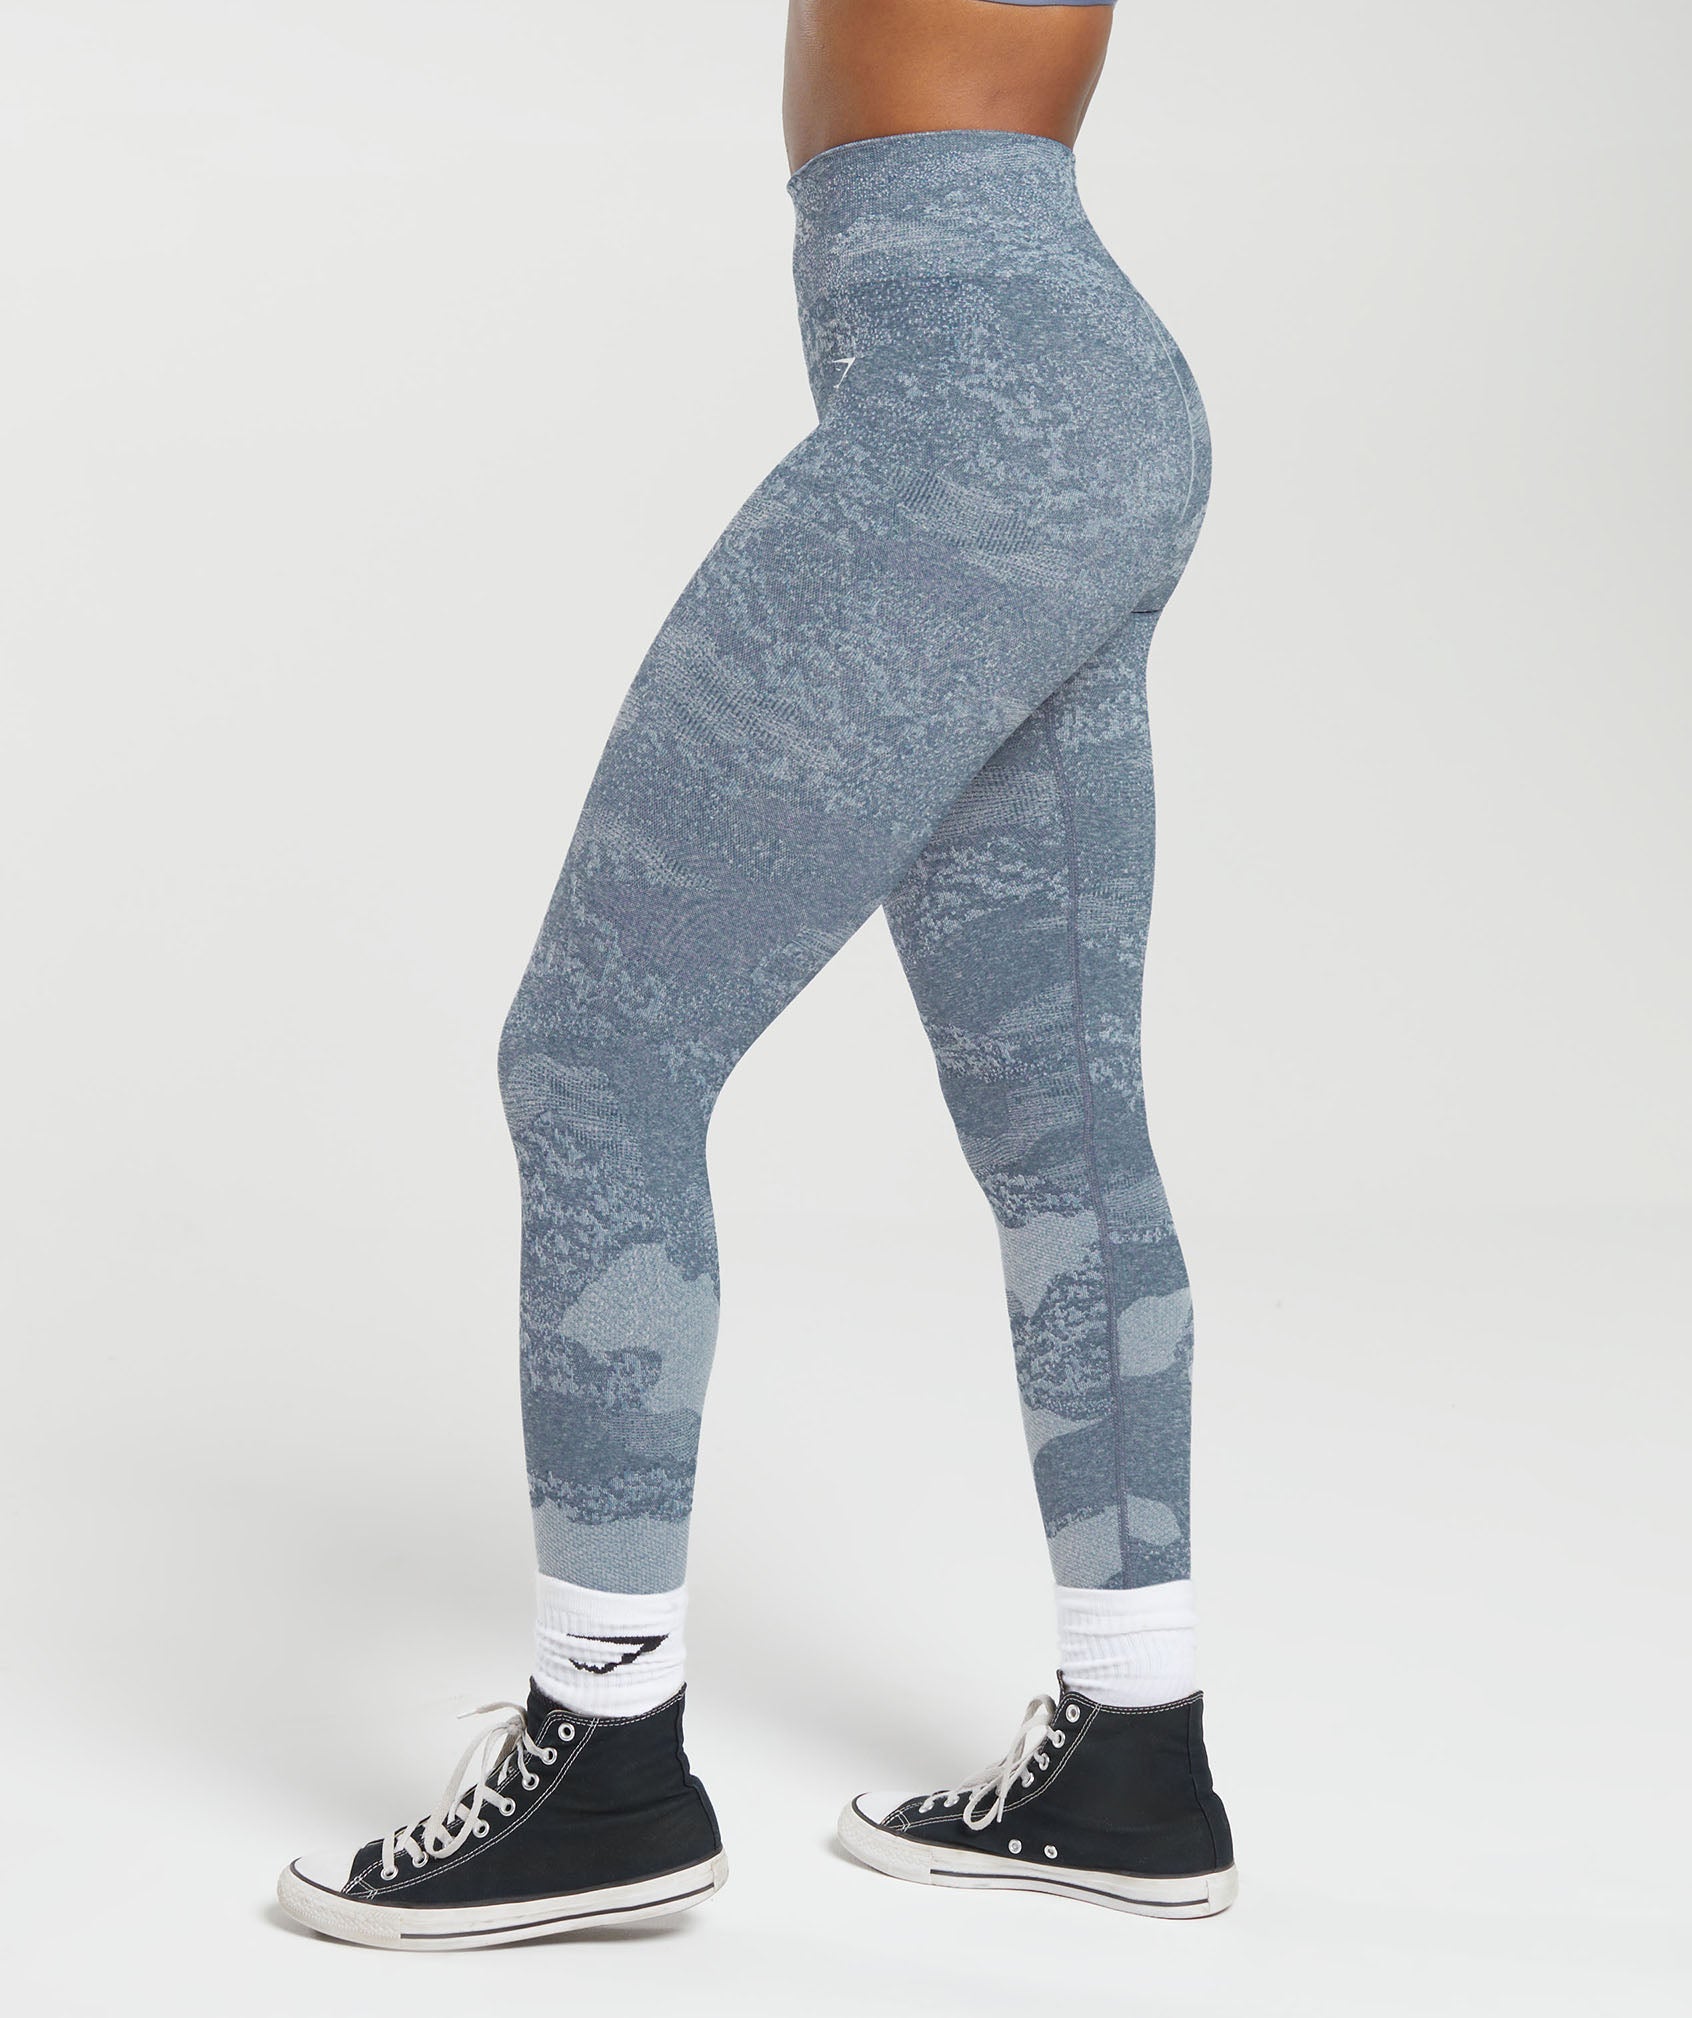 LULULEMON Womens Size 6 Blue Gray Leaf Camo Print High Rise Leggings